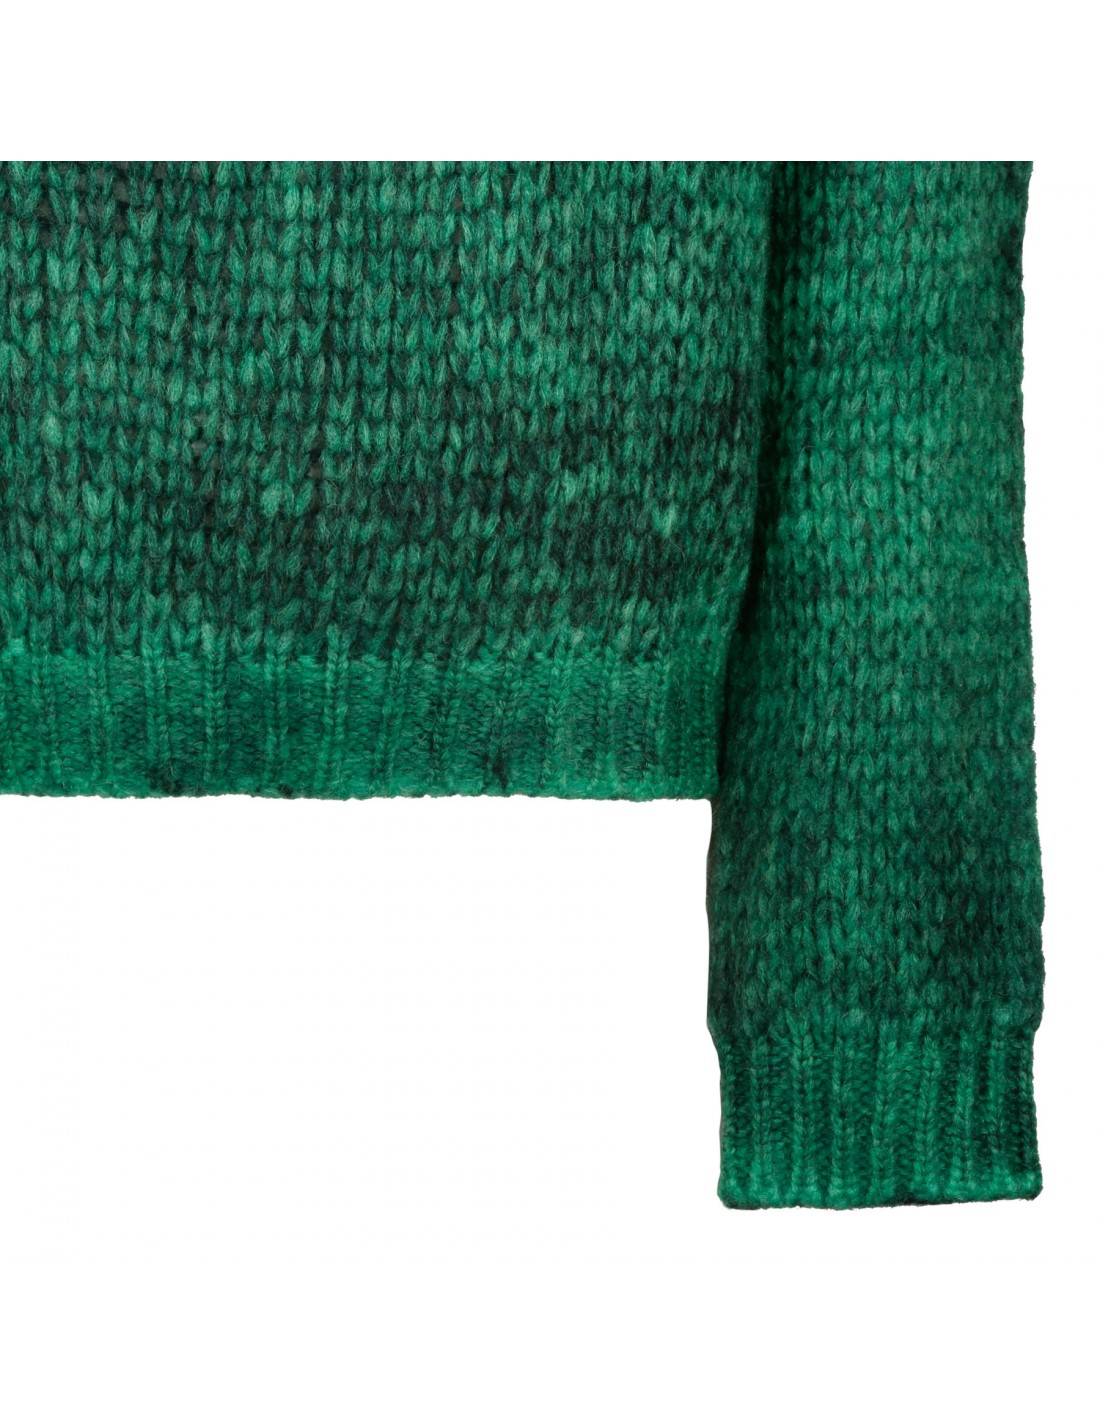 Mint green alpaca blend sweater